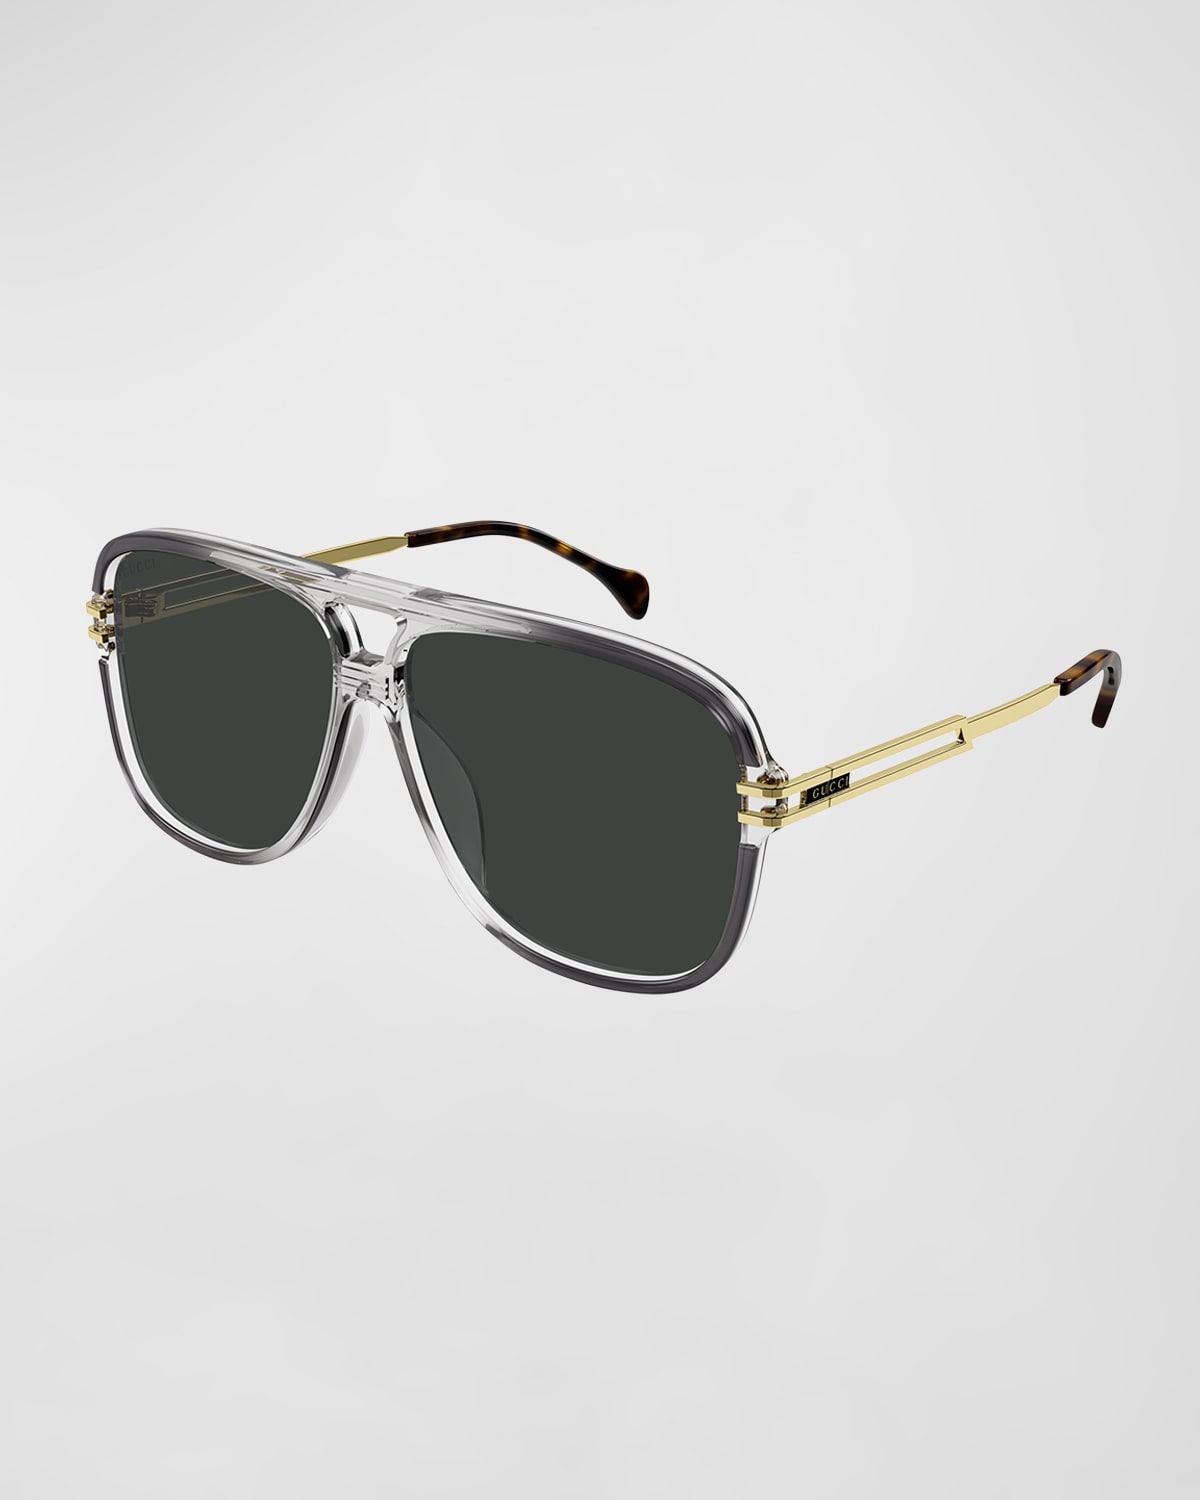 Gucci Men's Acetate Aviator Sunglasses In Gray Gradient